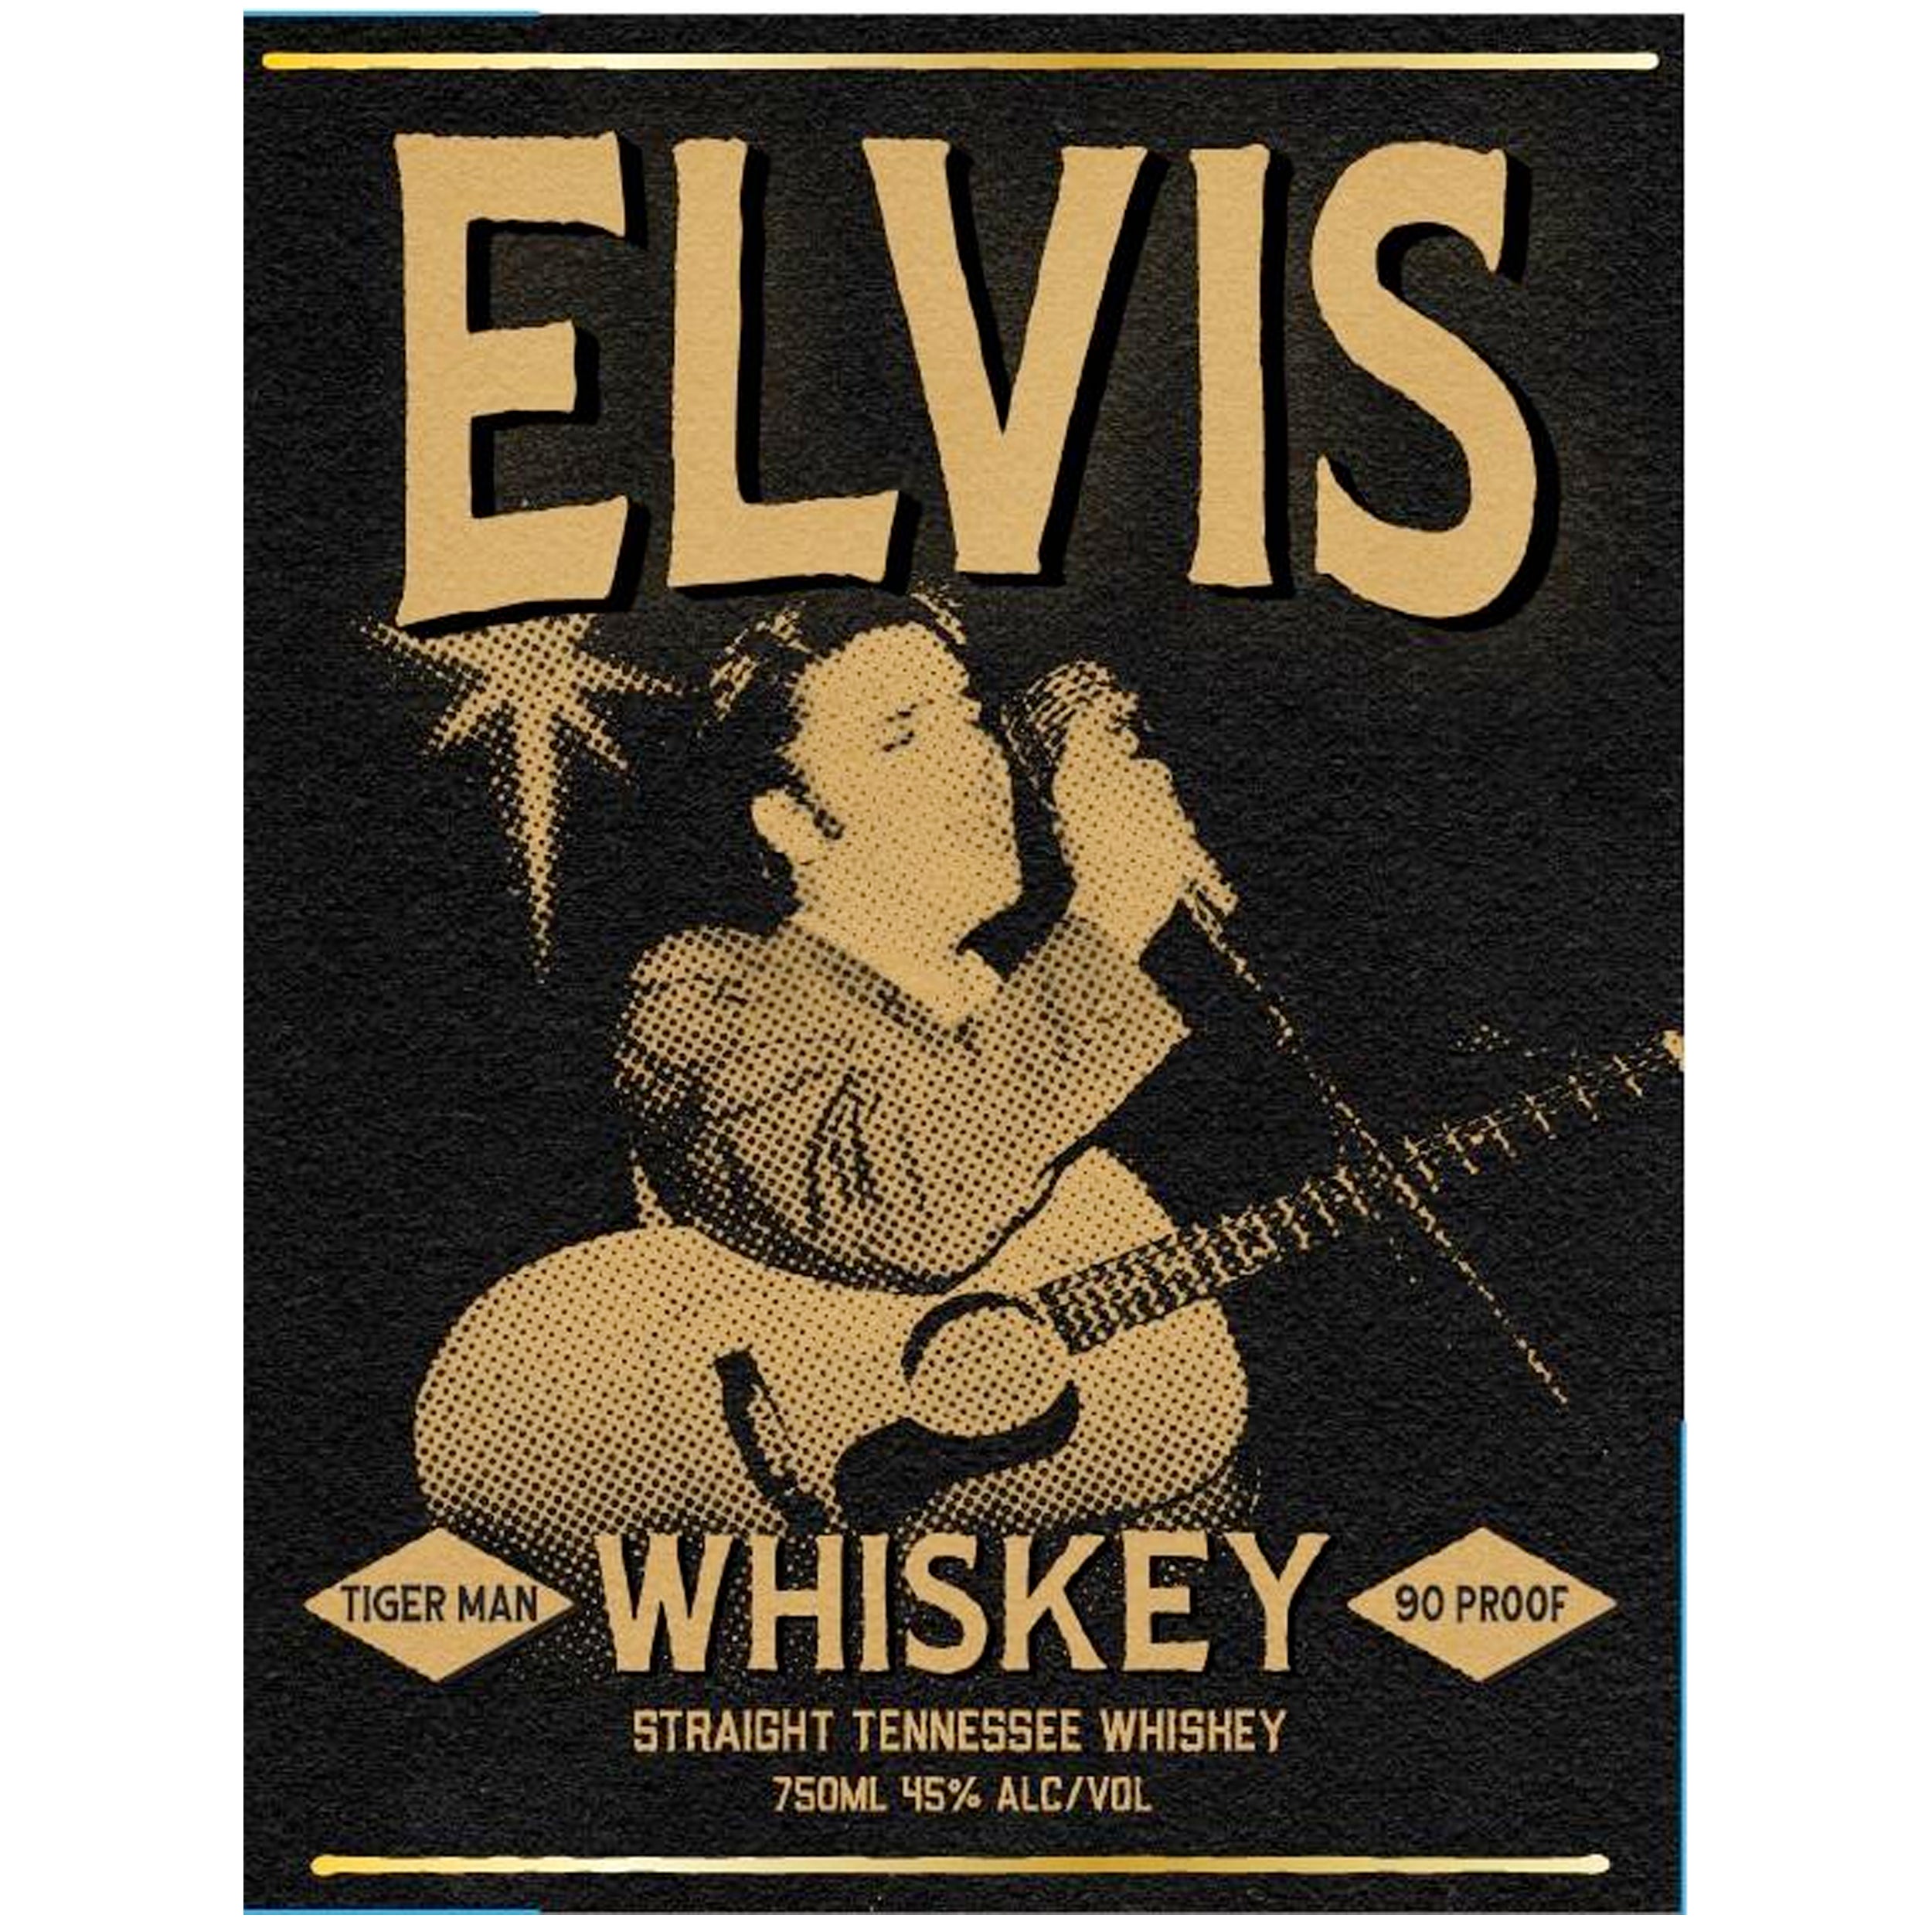 Elvis Straight Tennessee Whiskey